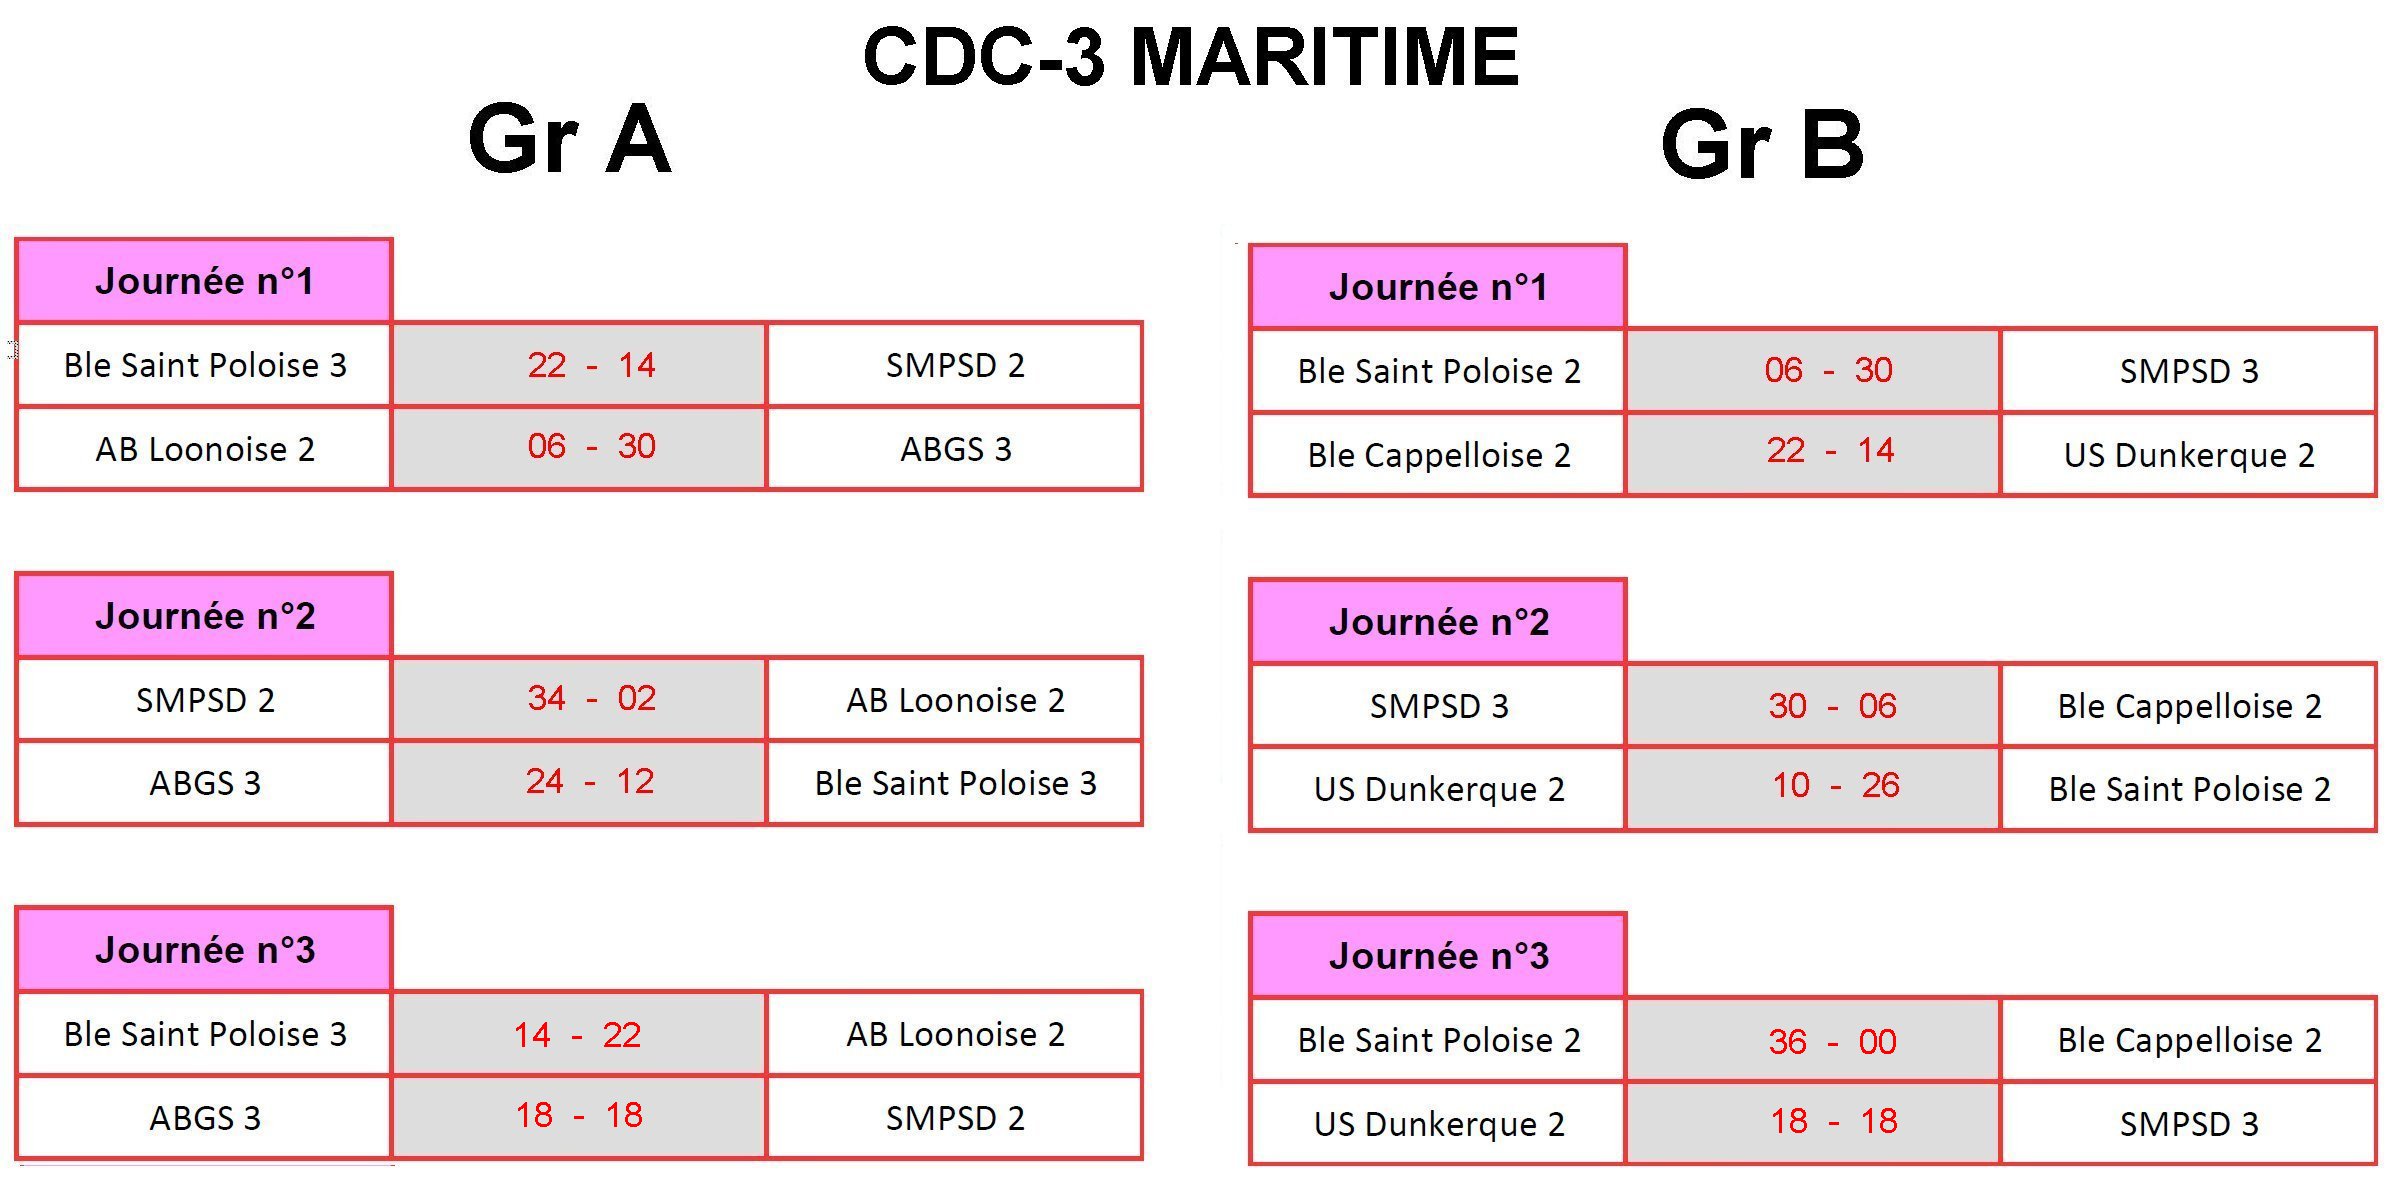 CDCV2 Maritime 2023